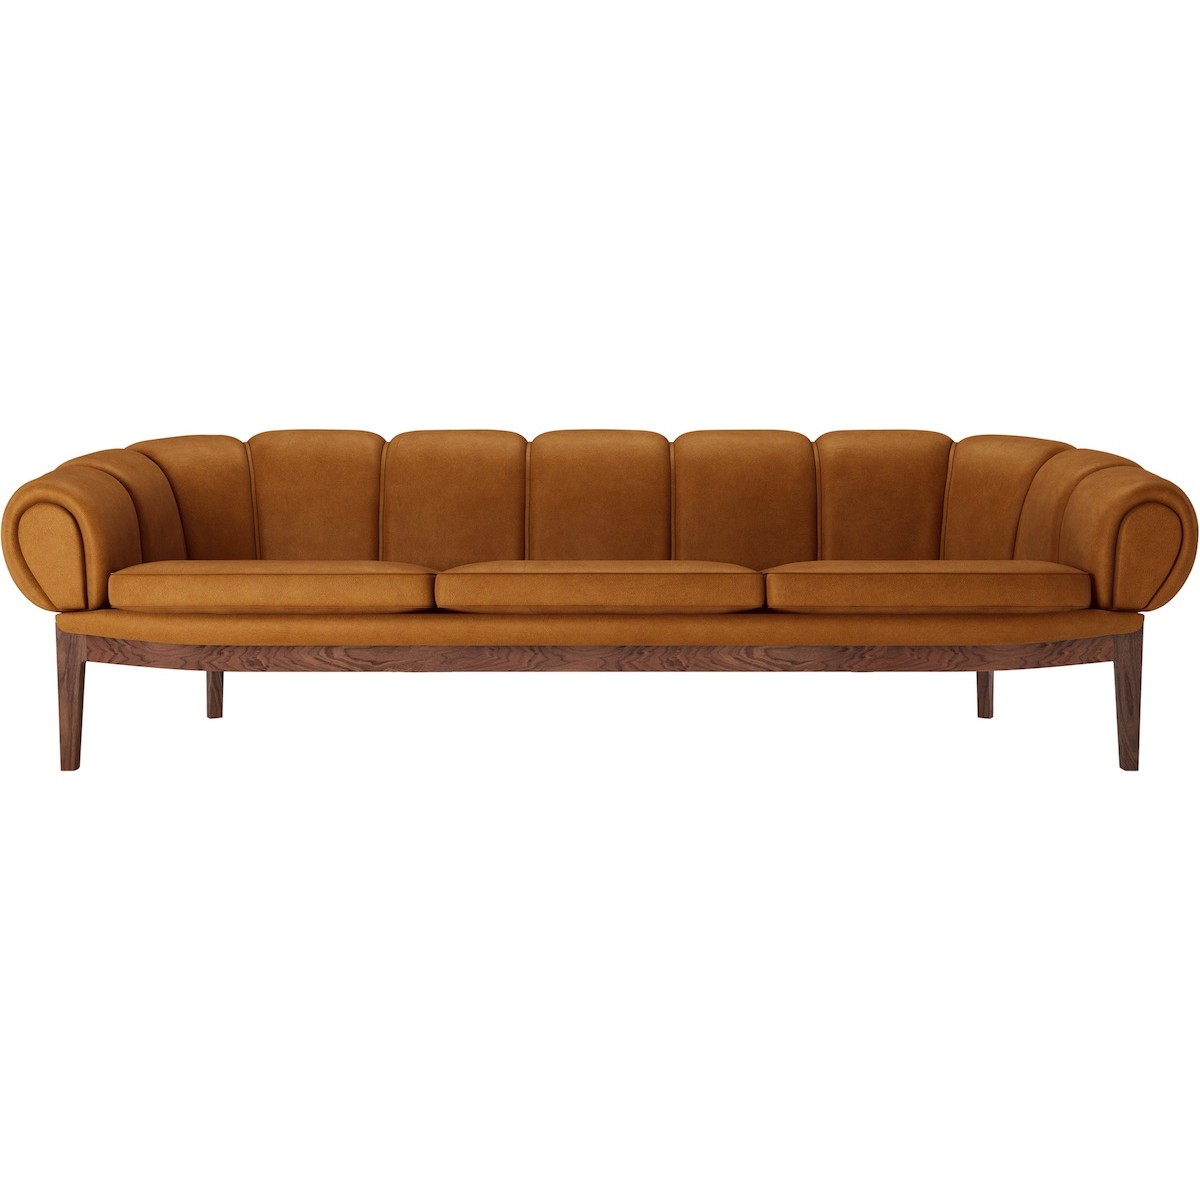 walnut, Chamois leather 1708 - Croissant 3-seater sofa